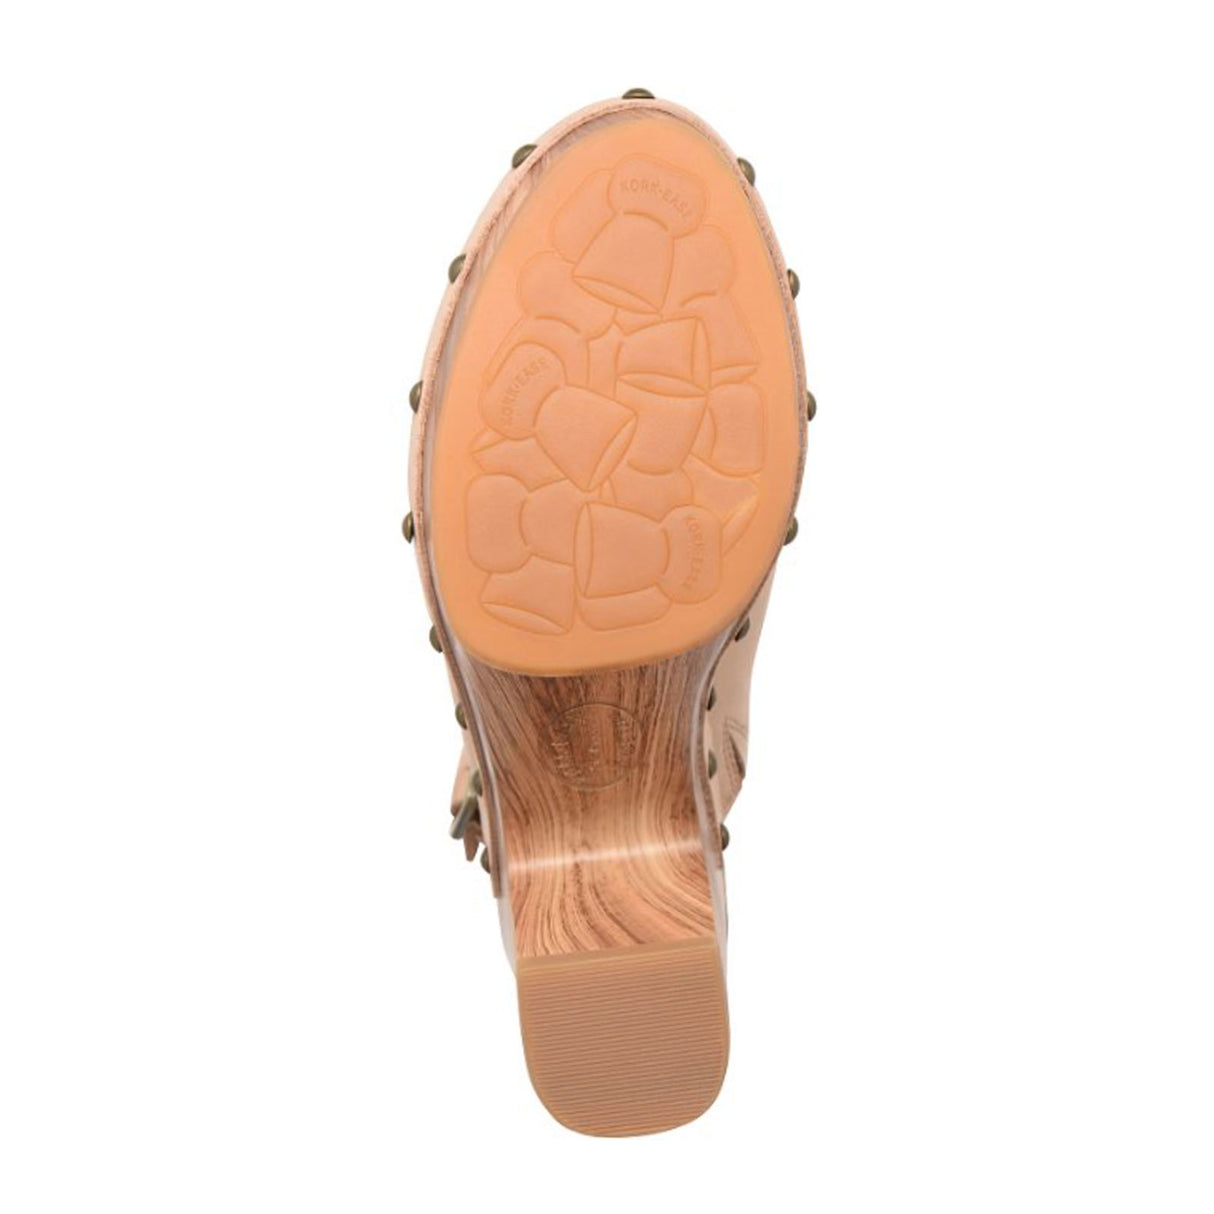 Kork-Ease Darby Heeled Sandal (Women) - Natural (Nude) Sandals - Heeled - The Heel Shoe Fitters